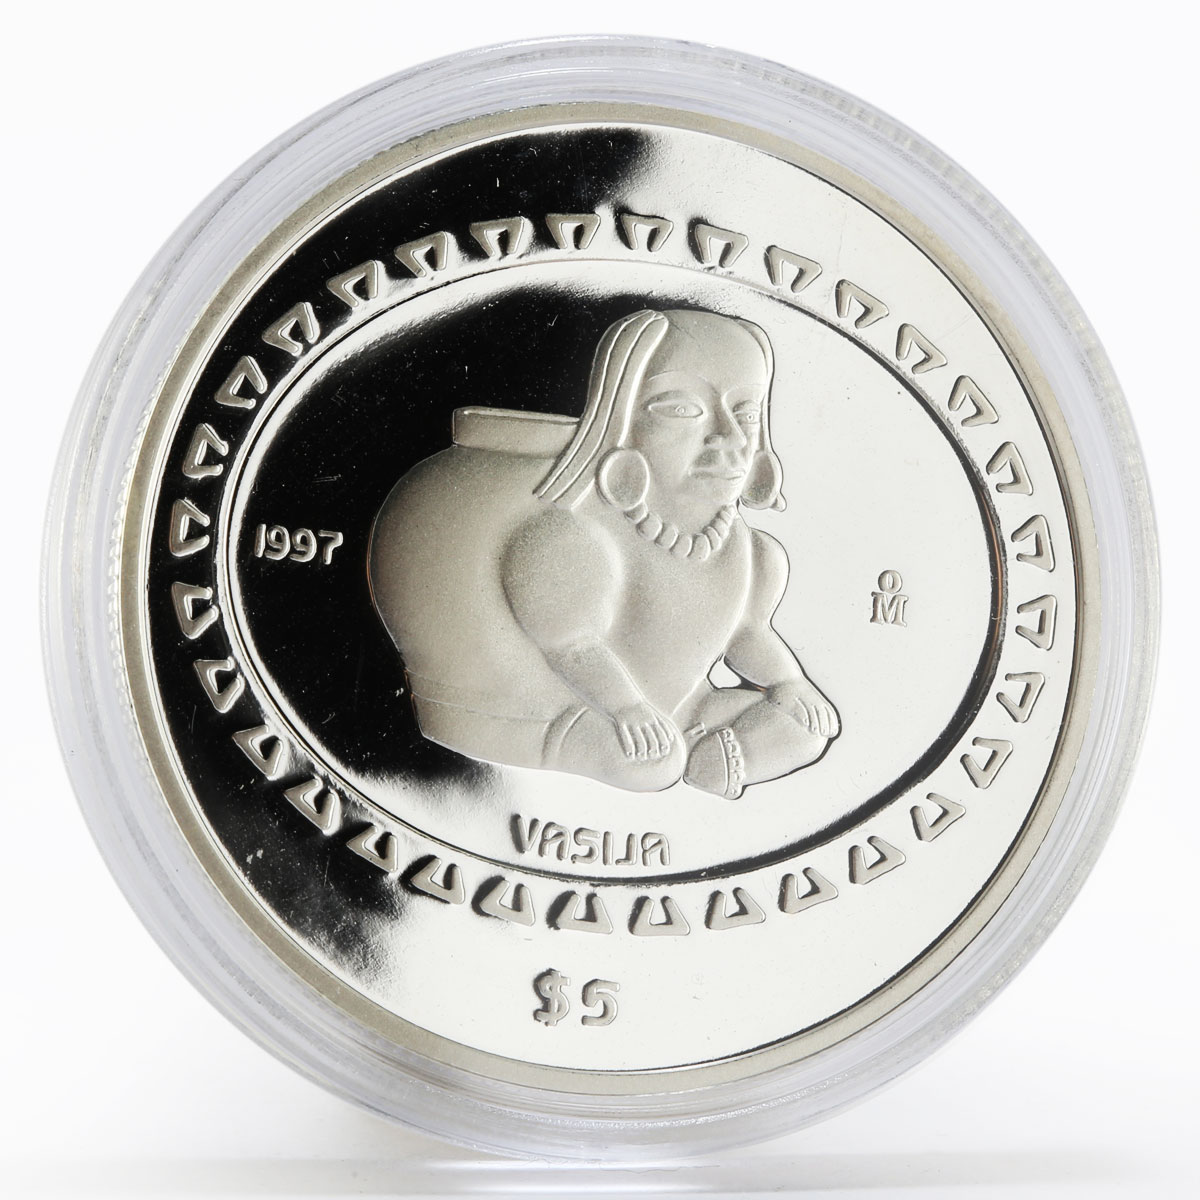 Mexico 5 pesos Teotihuacan Vasija proof silver coin 1997